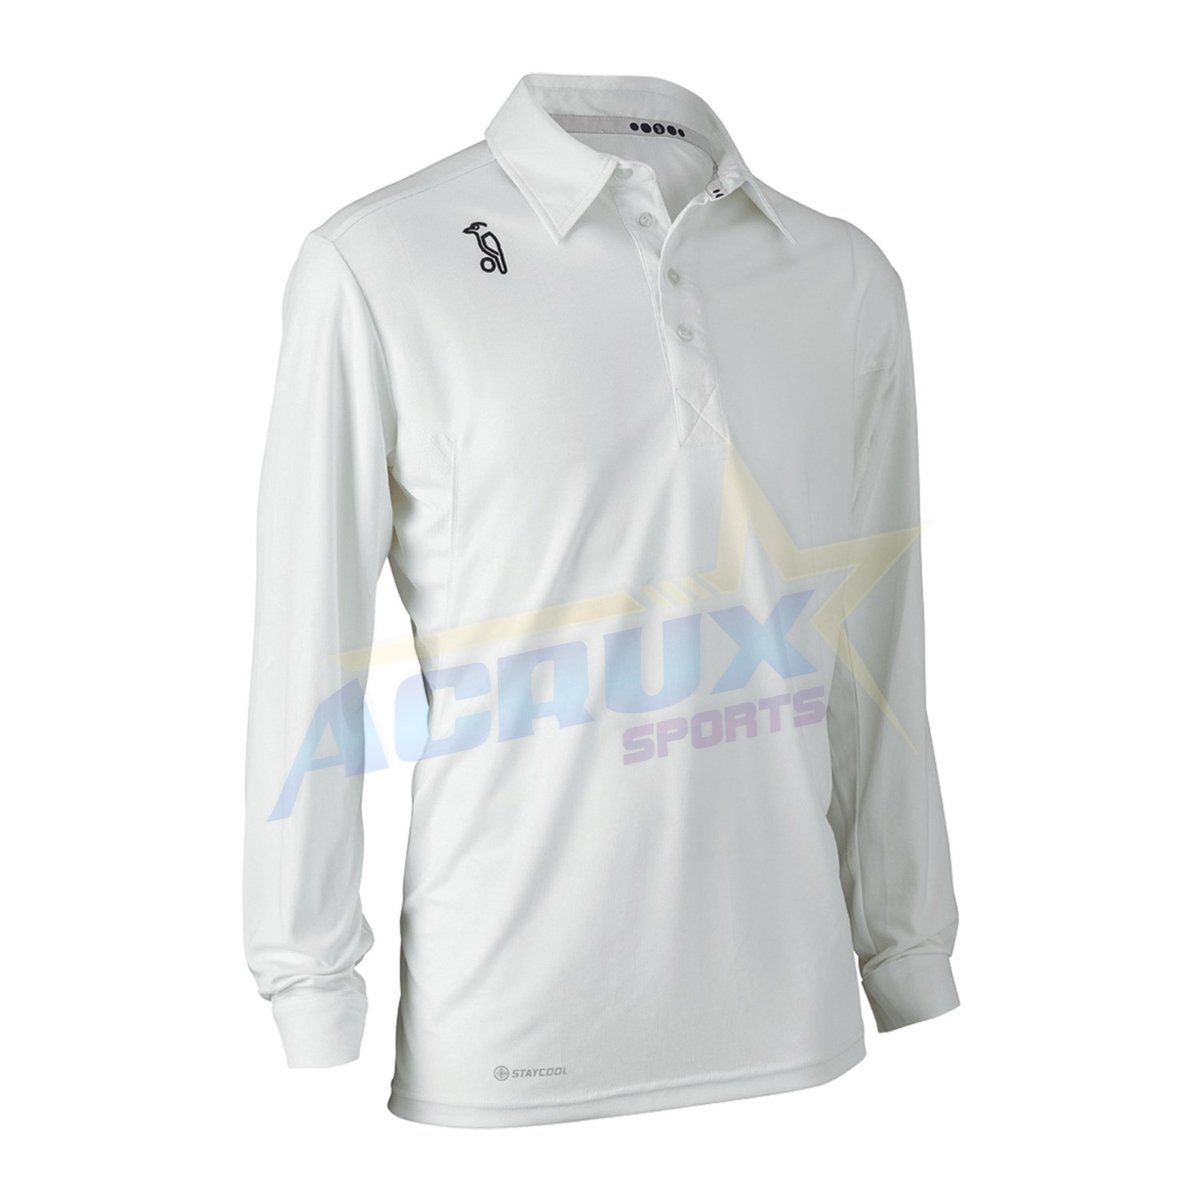 Kookaburra Pro Active Full Sleeve Cricket Shirt White